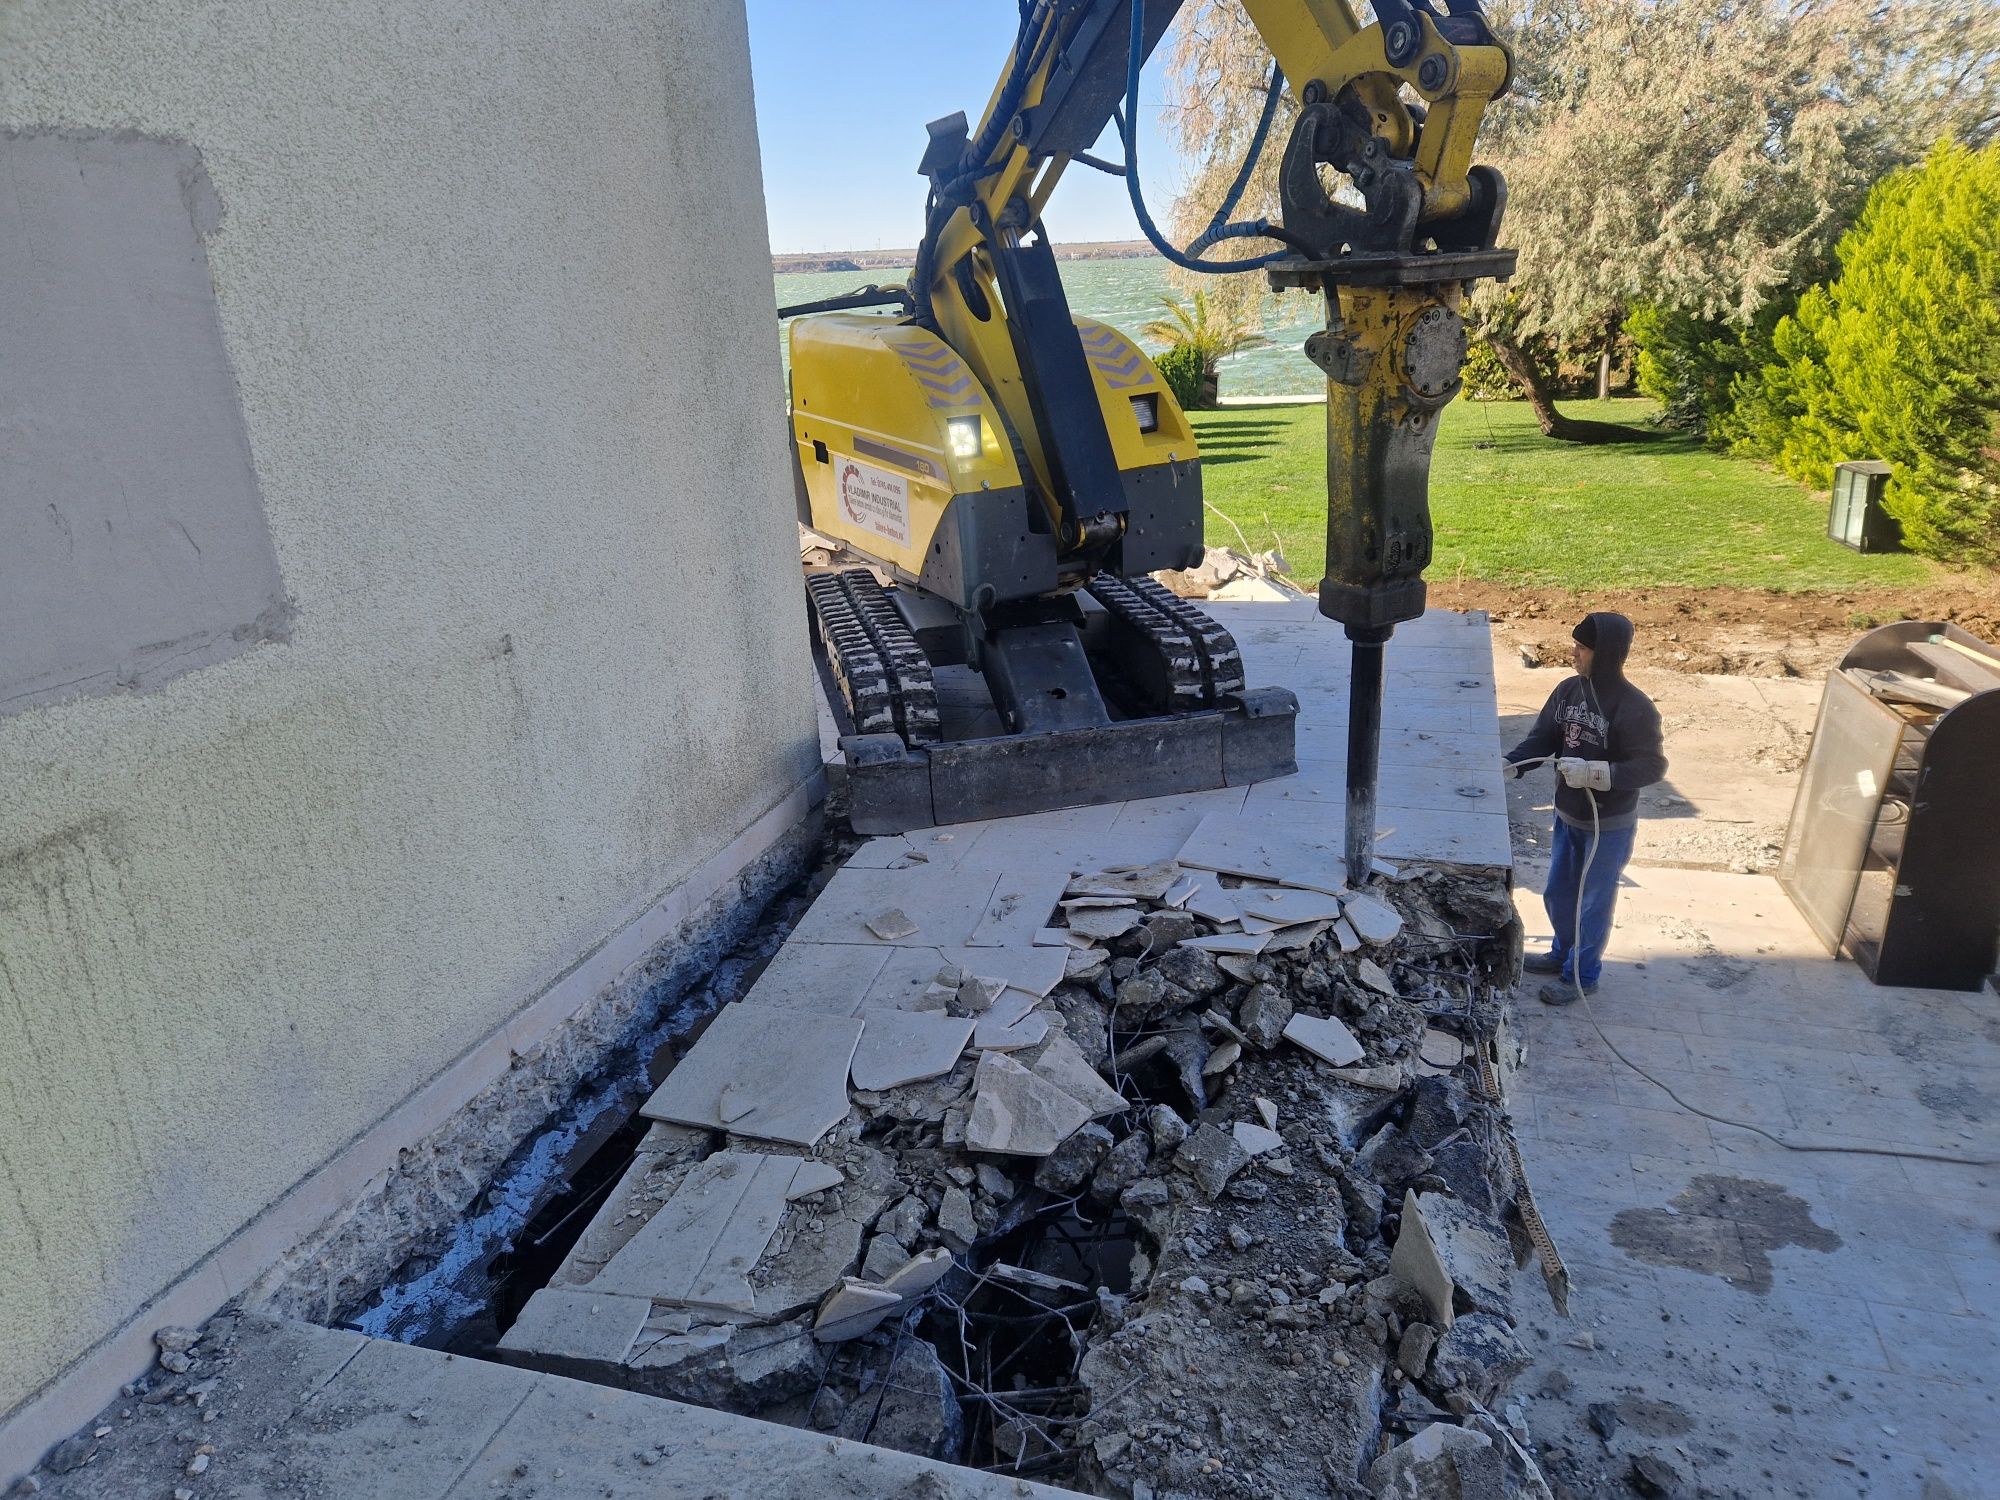 Taiat taiere decupare spart demolat beton profesional,gauri de carota